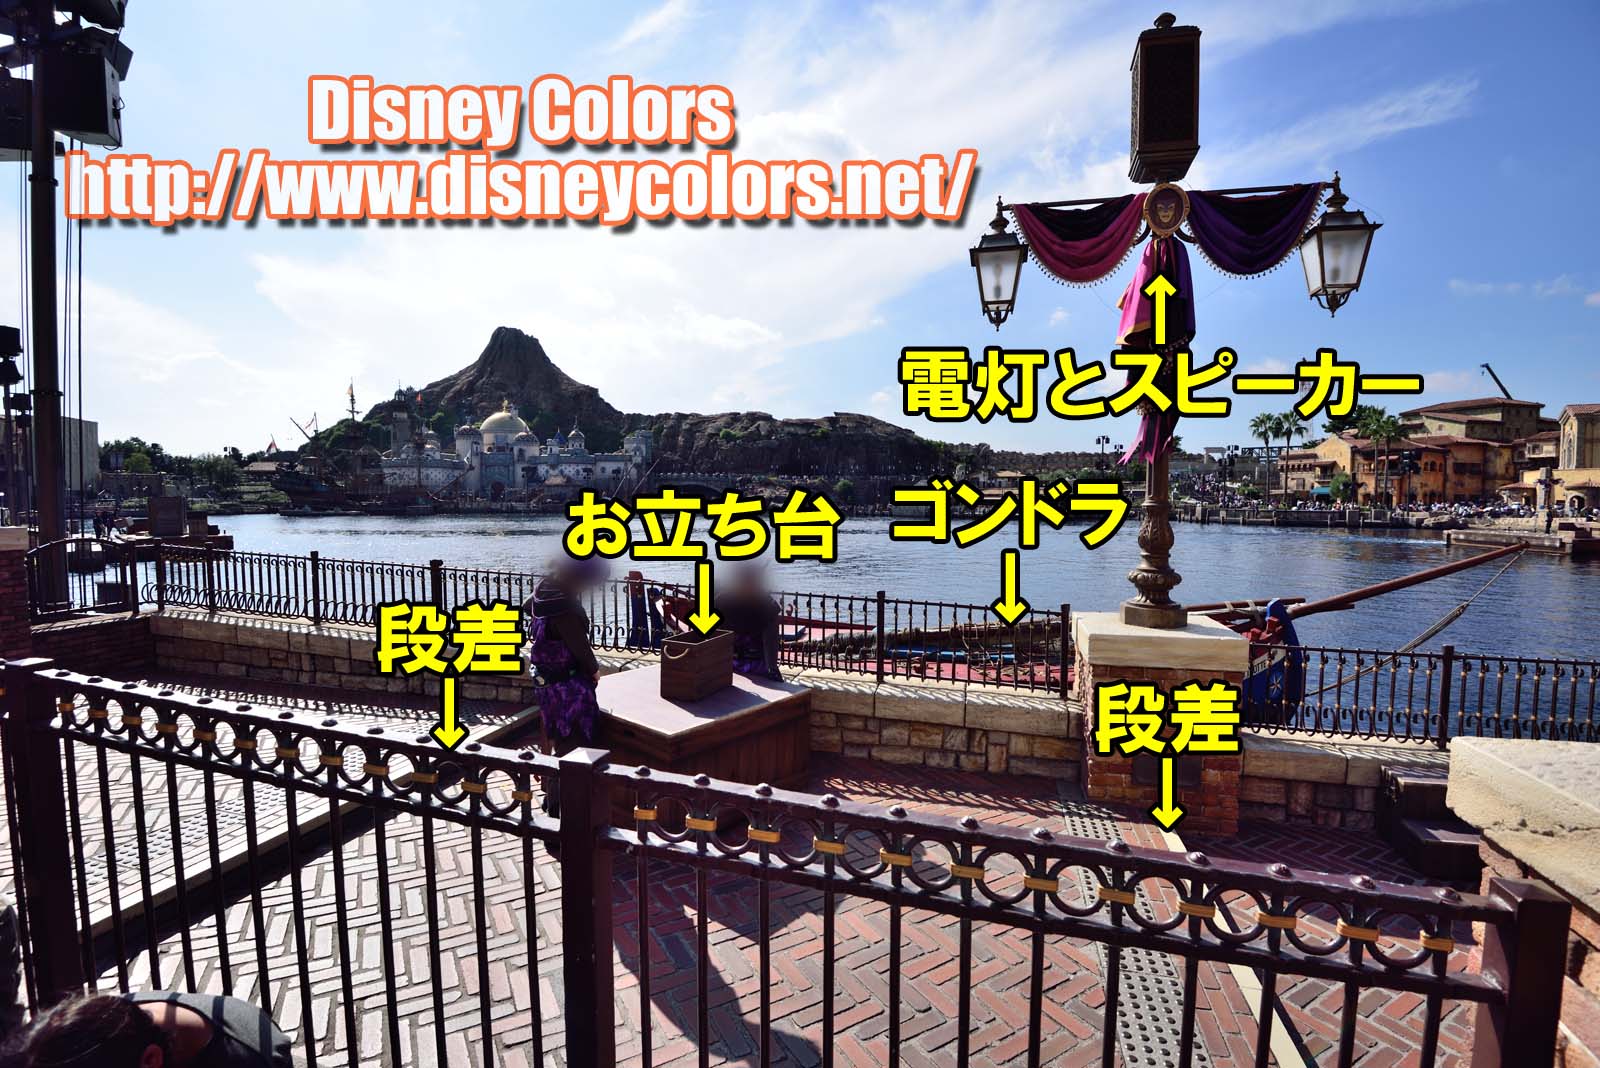 Tds ザ ヴィランズ ワールド17 鑑賞ガイド Disney Colors Event Guide